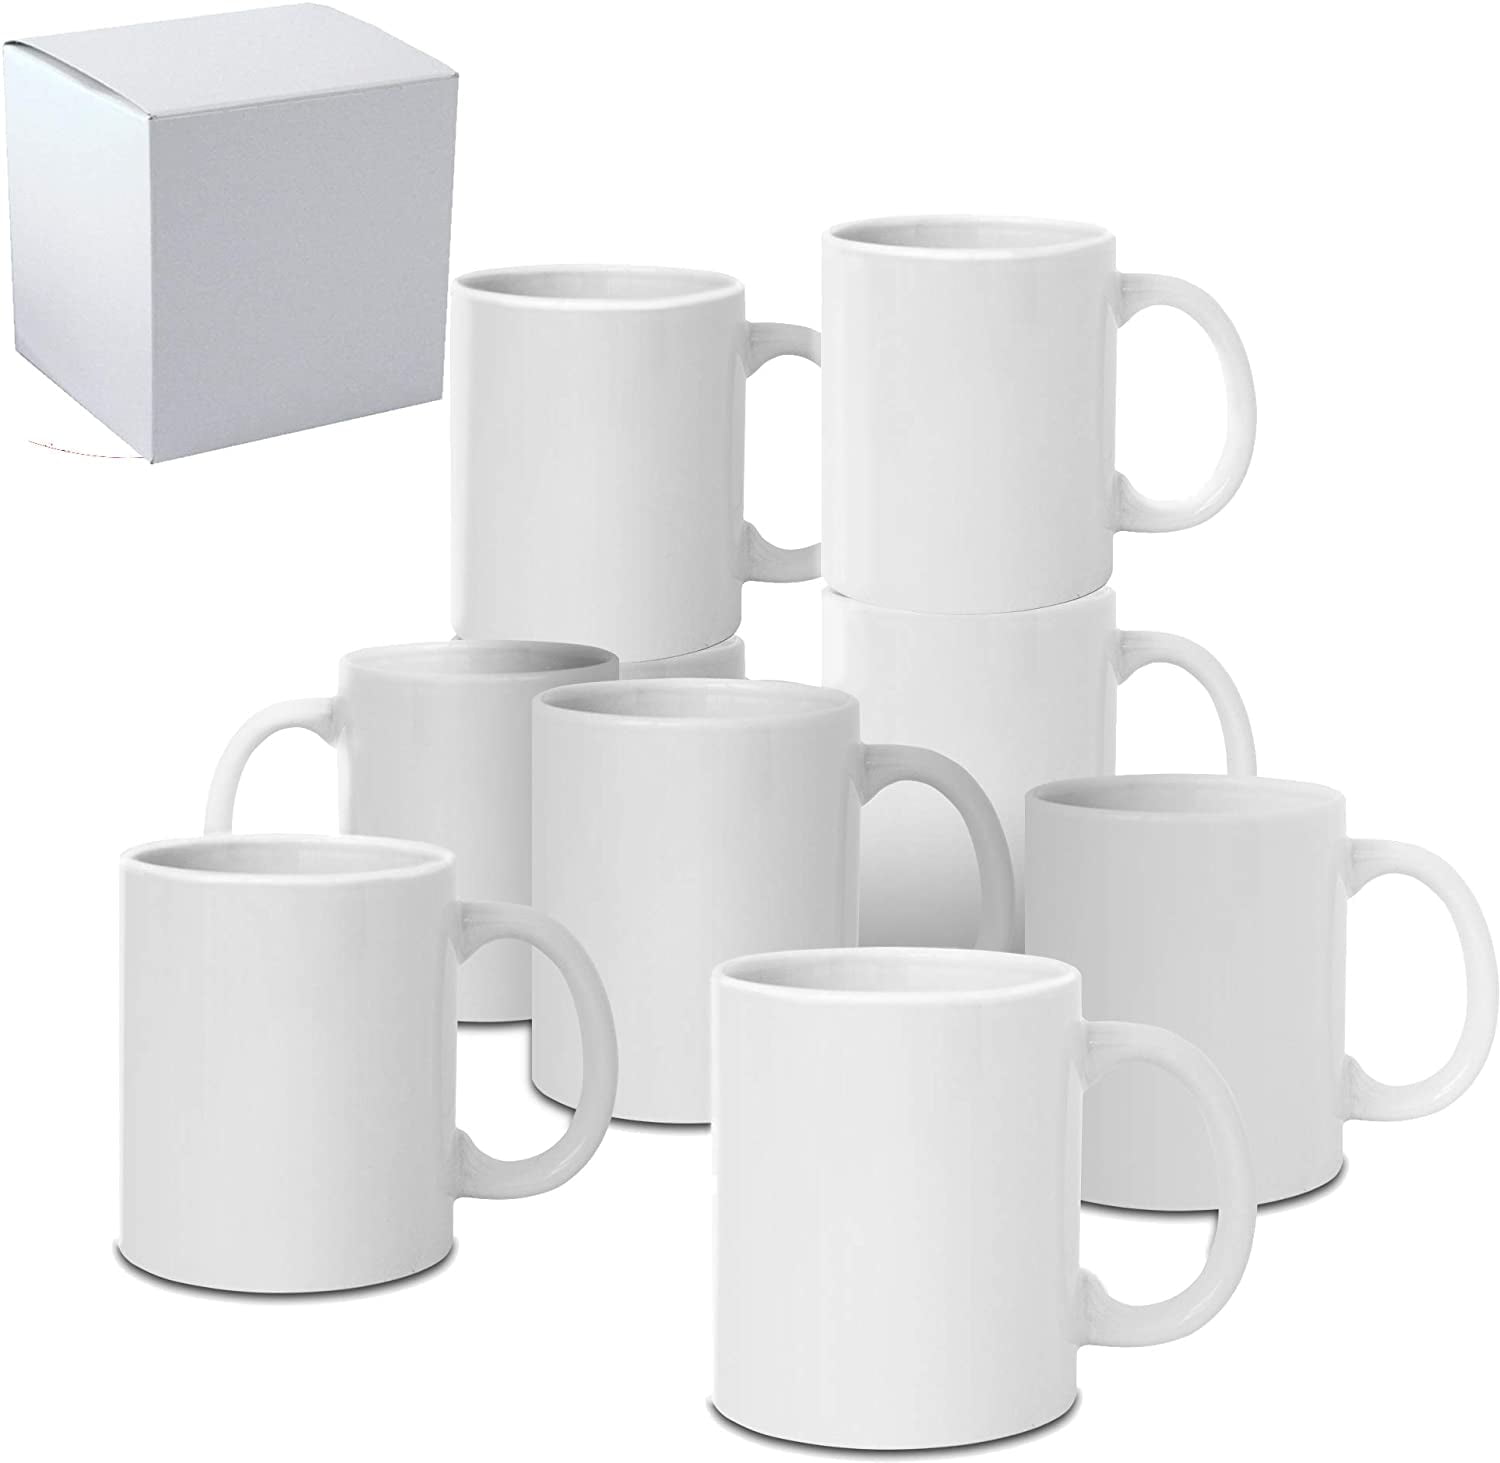 MR.R Set of 6 Sublimation Blanks Dishwasher White Ceramic Coffee Mugs 11oz Blank Ceramic Classic Drinking Cup Mug for Milk Tea Cola Water